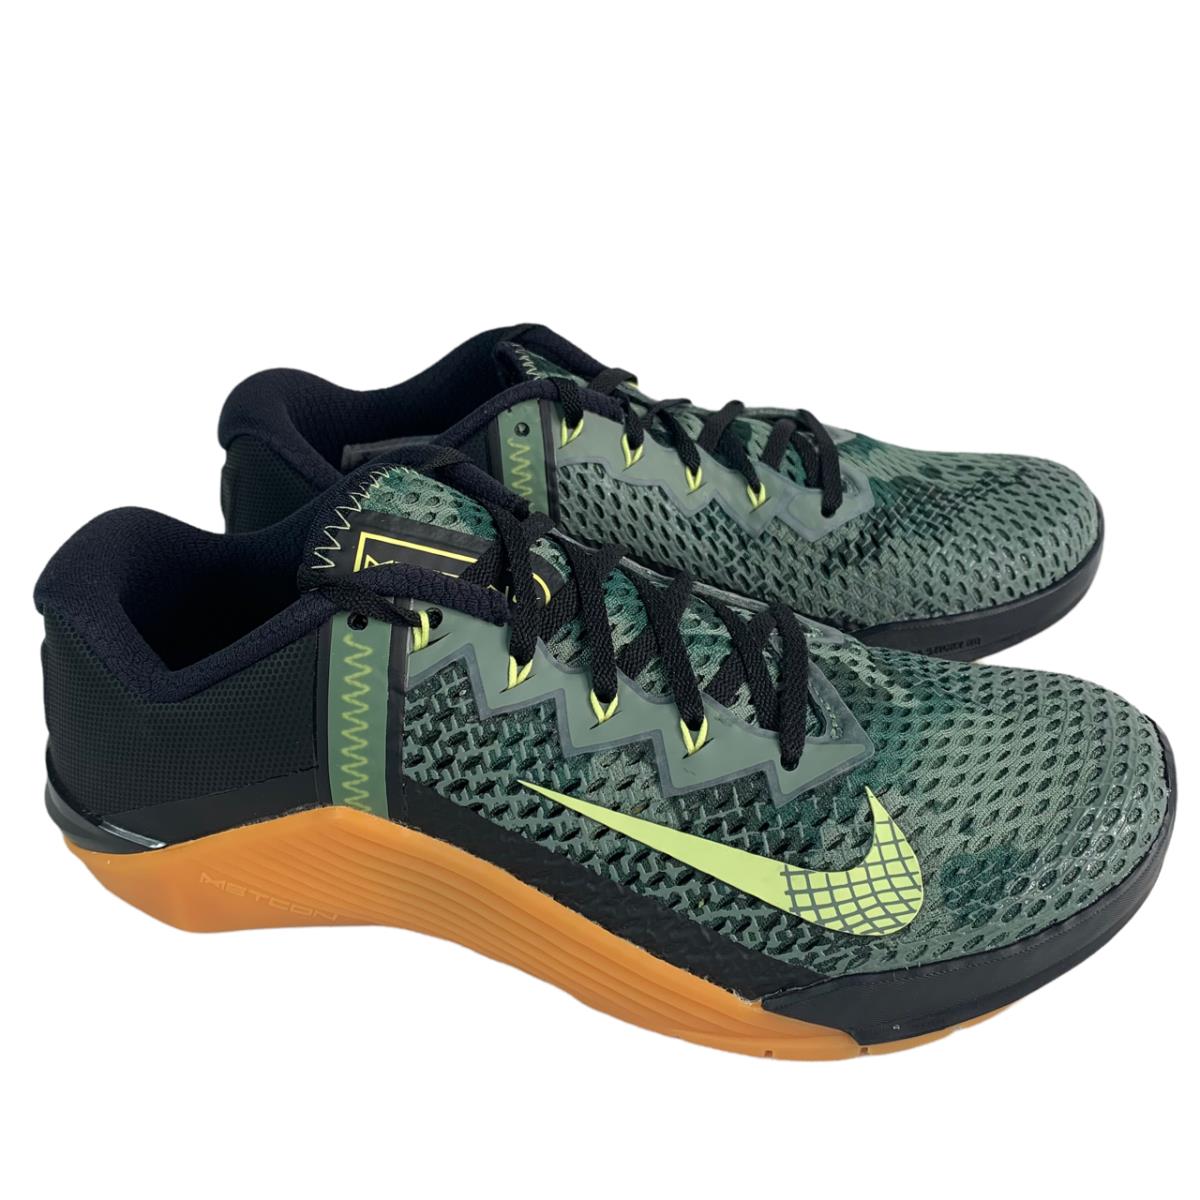 Nike Metcon 6 Black/limelight Training Shoe Men`s Size 8.5 CK9388 032 - Black